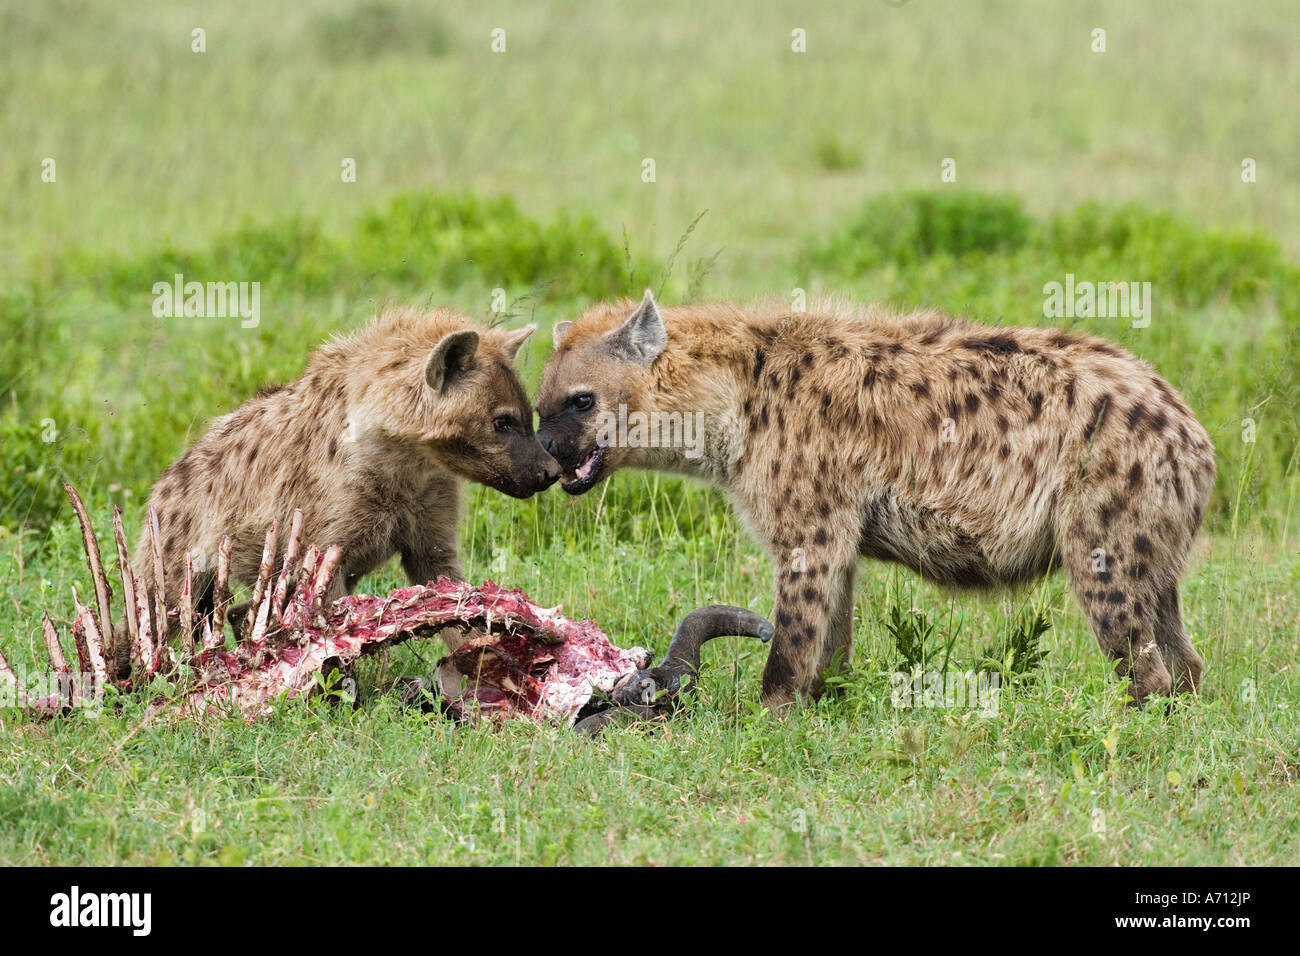 two spotted hyenas at prey / Crocuta crocuta Stock Photo